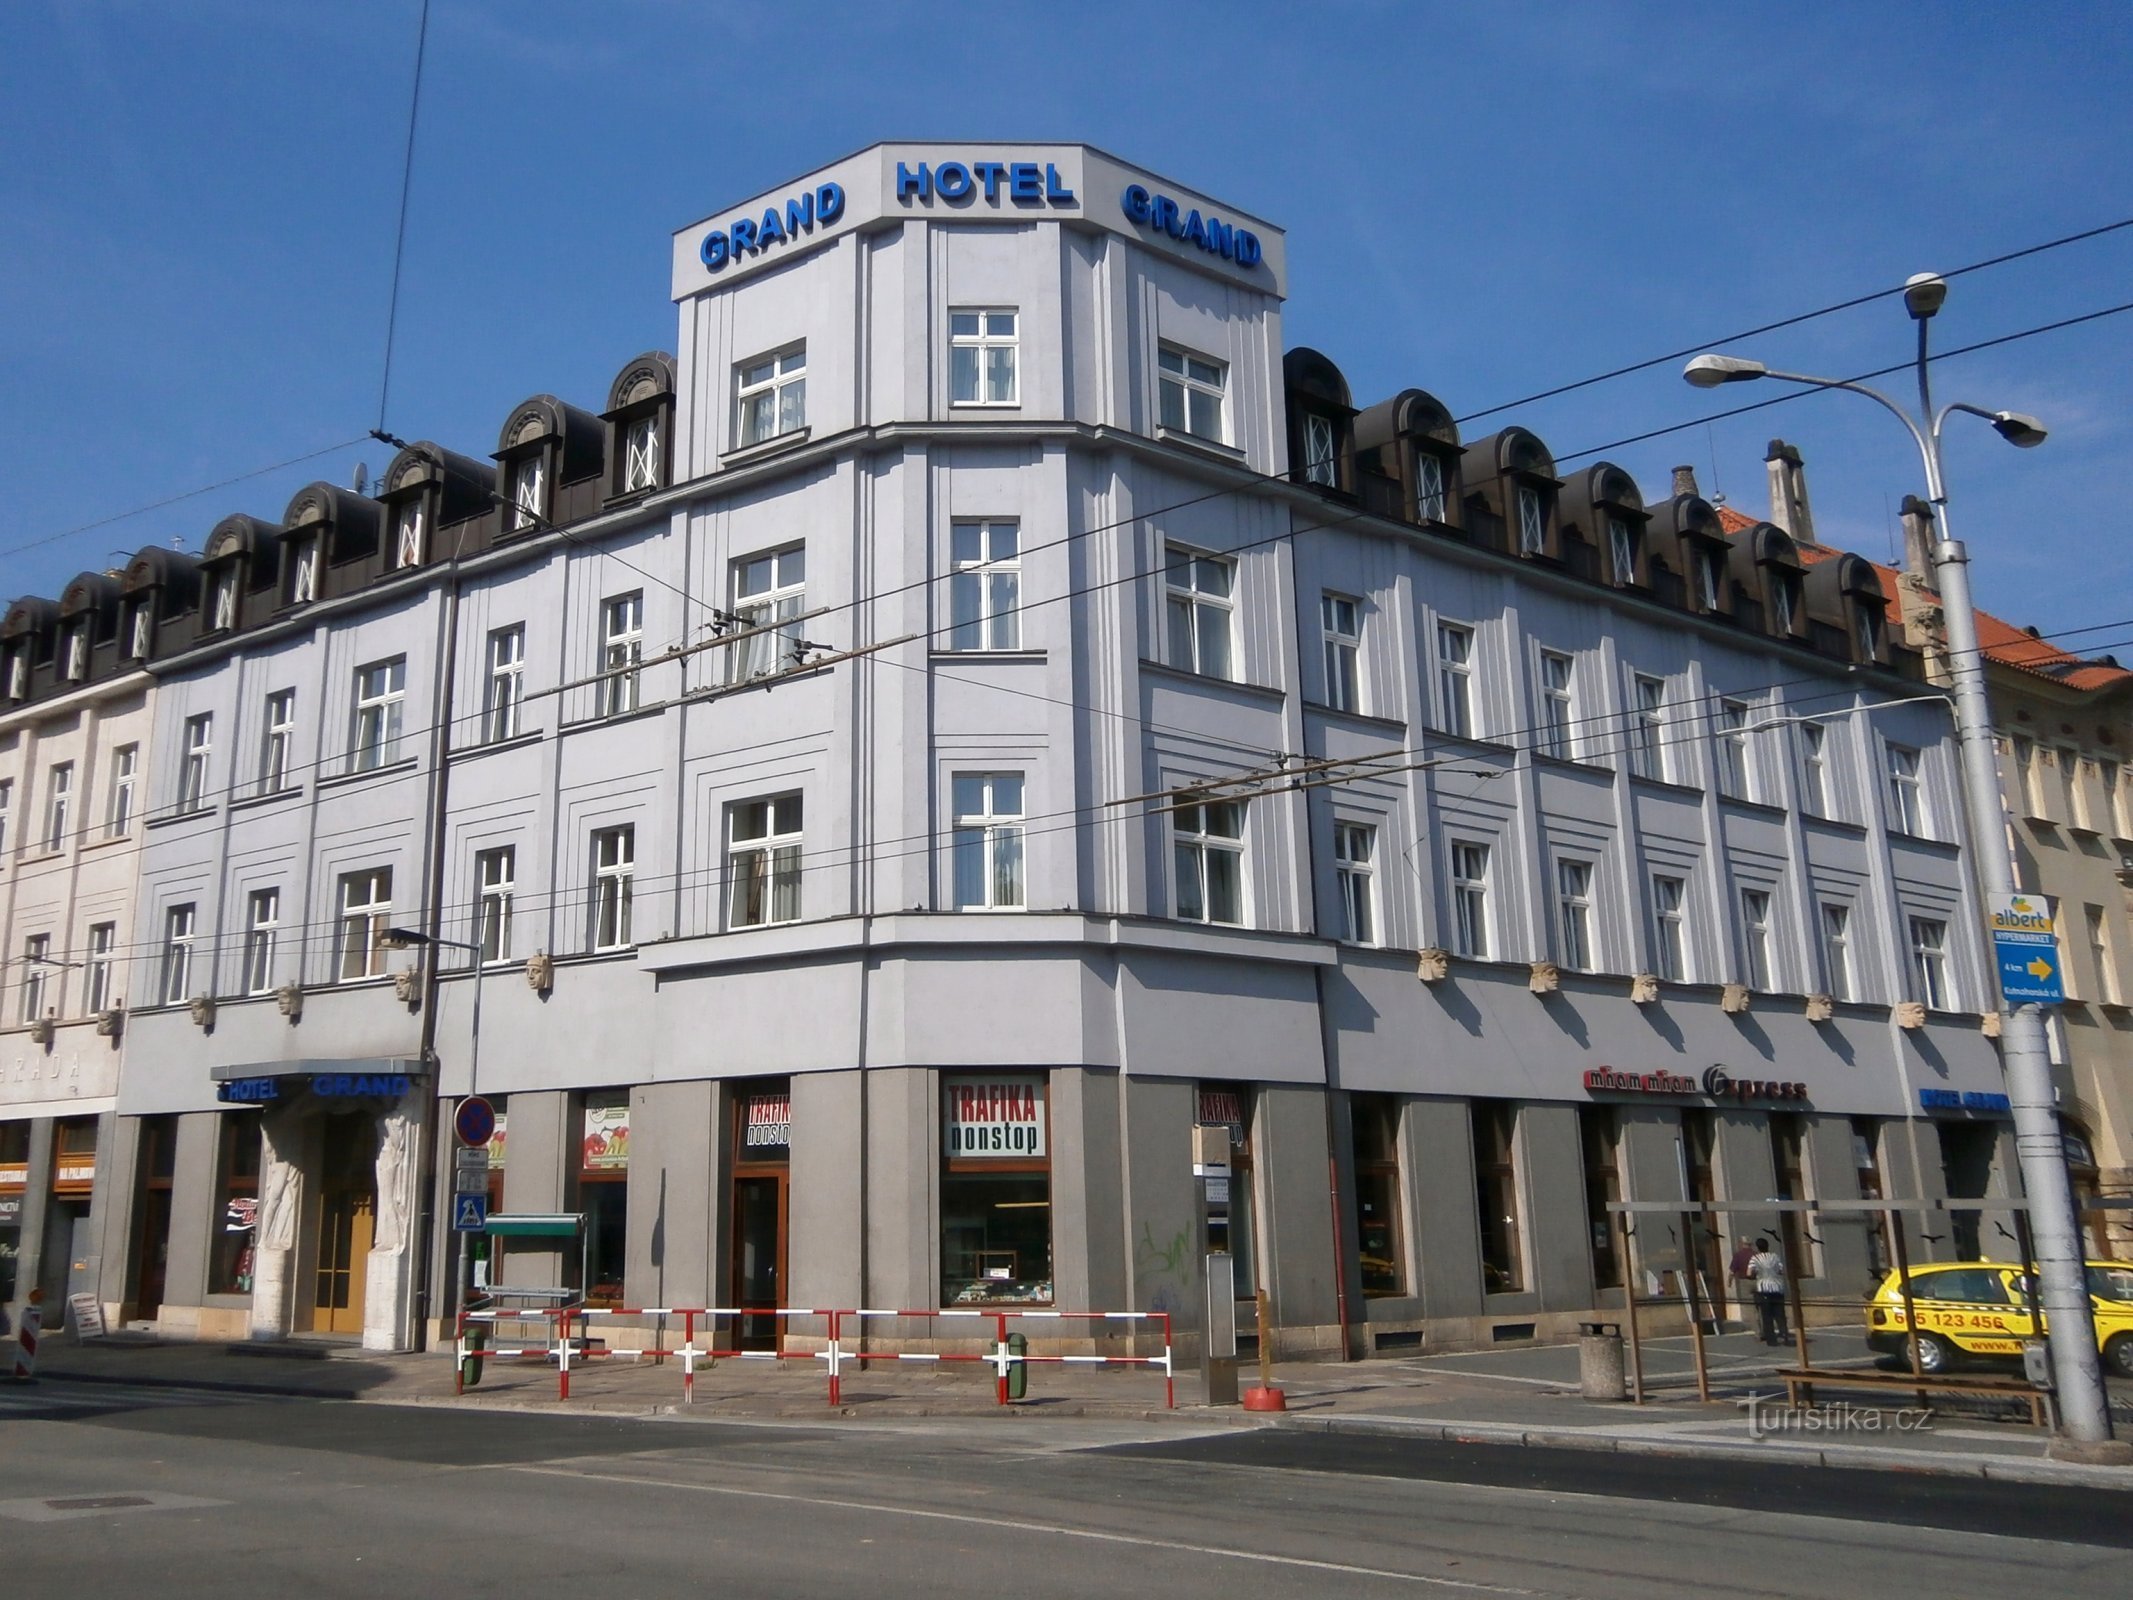 Grandhotel Urban (Hradec Králové, 2.8.2014/XNUMX/XNUMX)